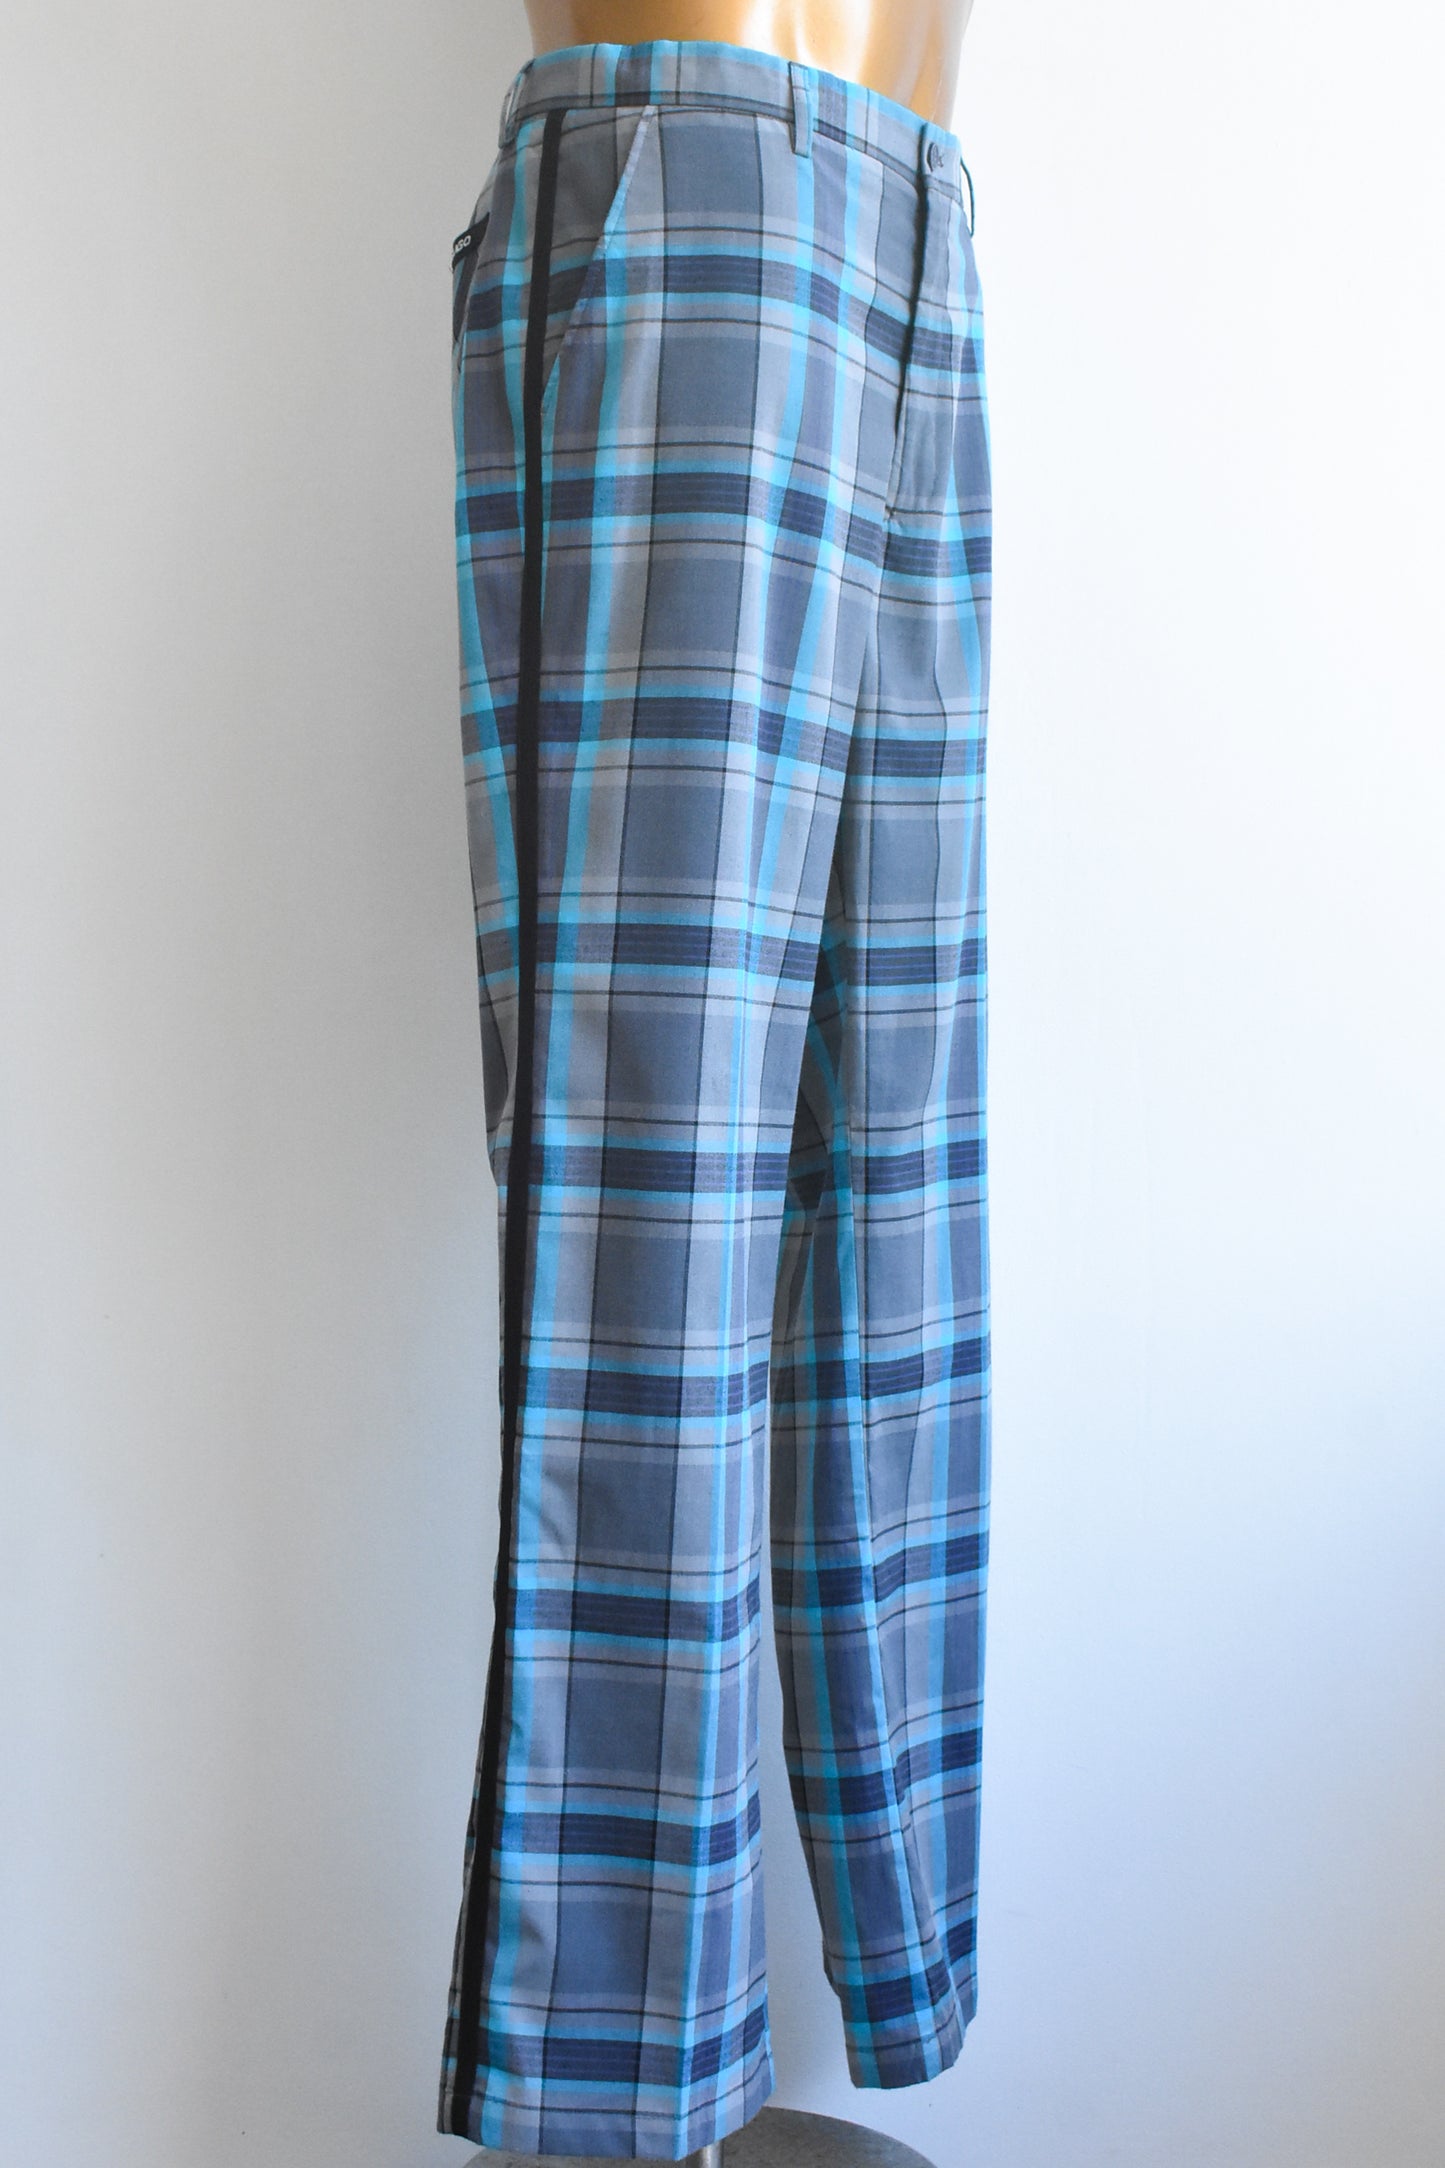 Sligo men's plaid golf trousers, size 36